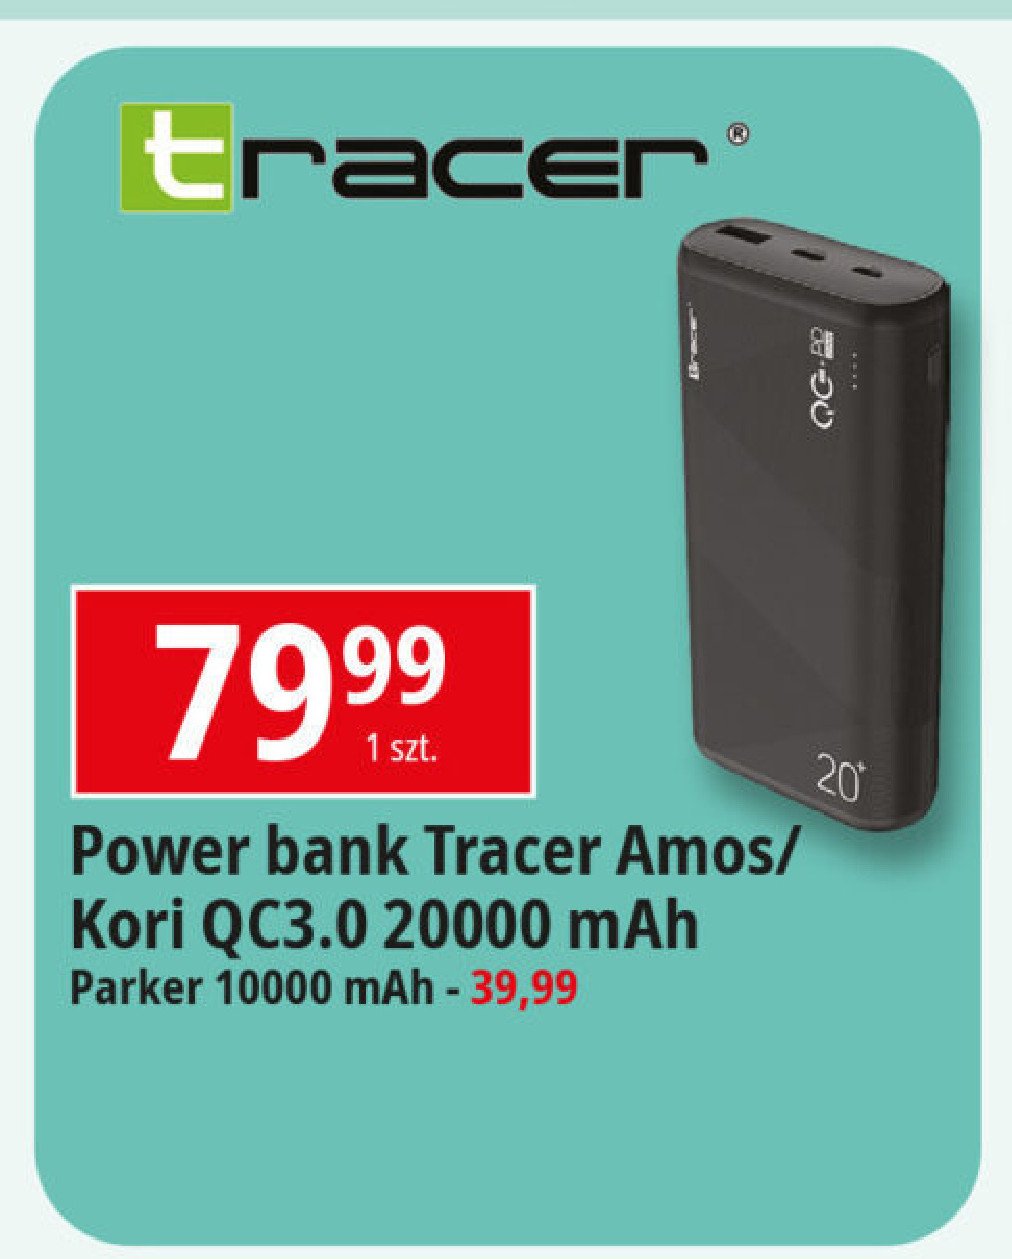 Powerbank amos trabat47094 Tracer promocja